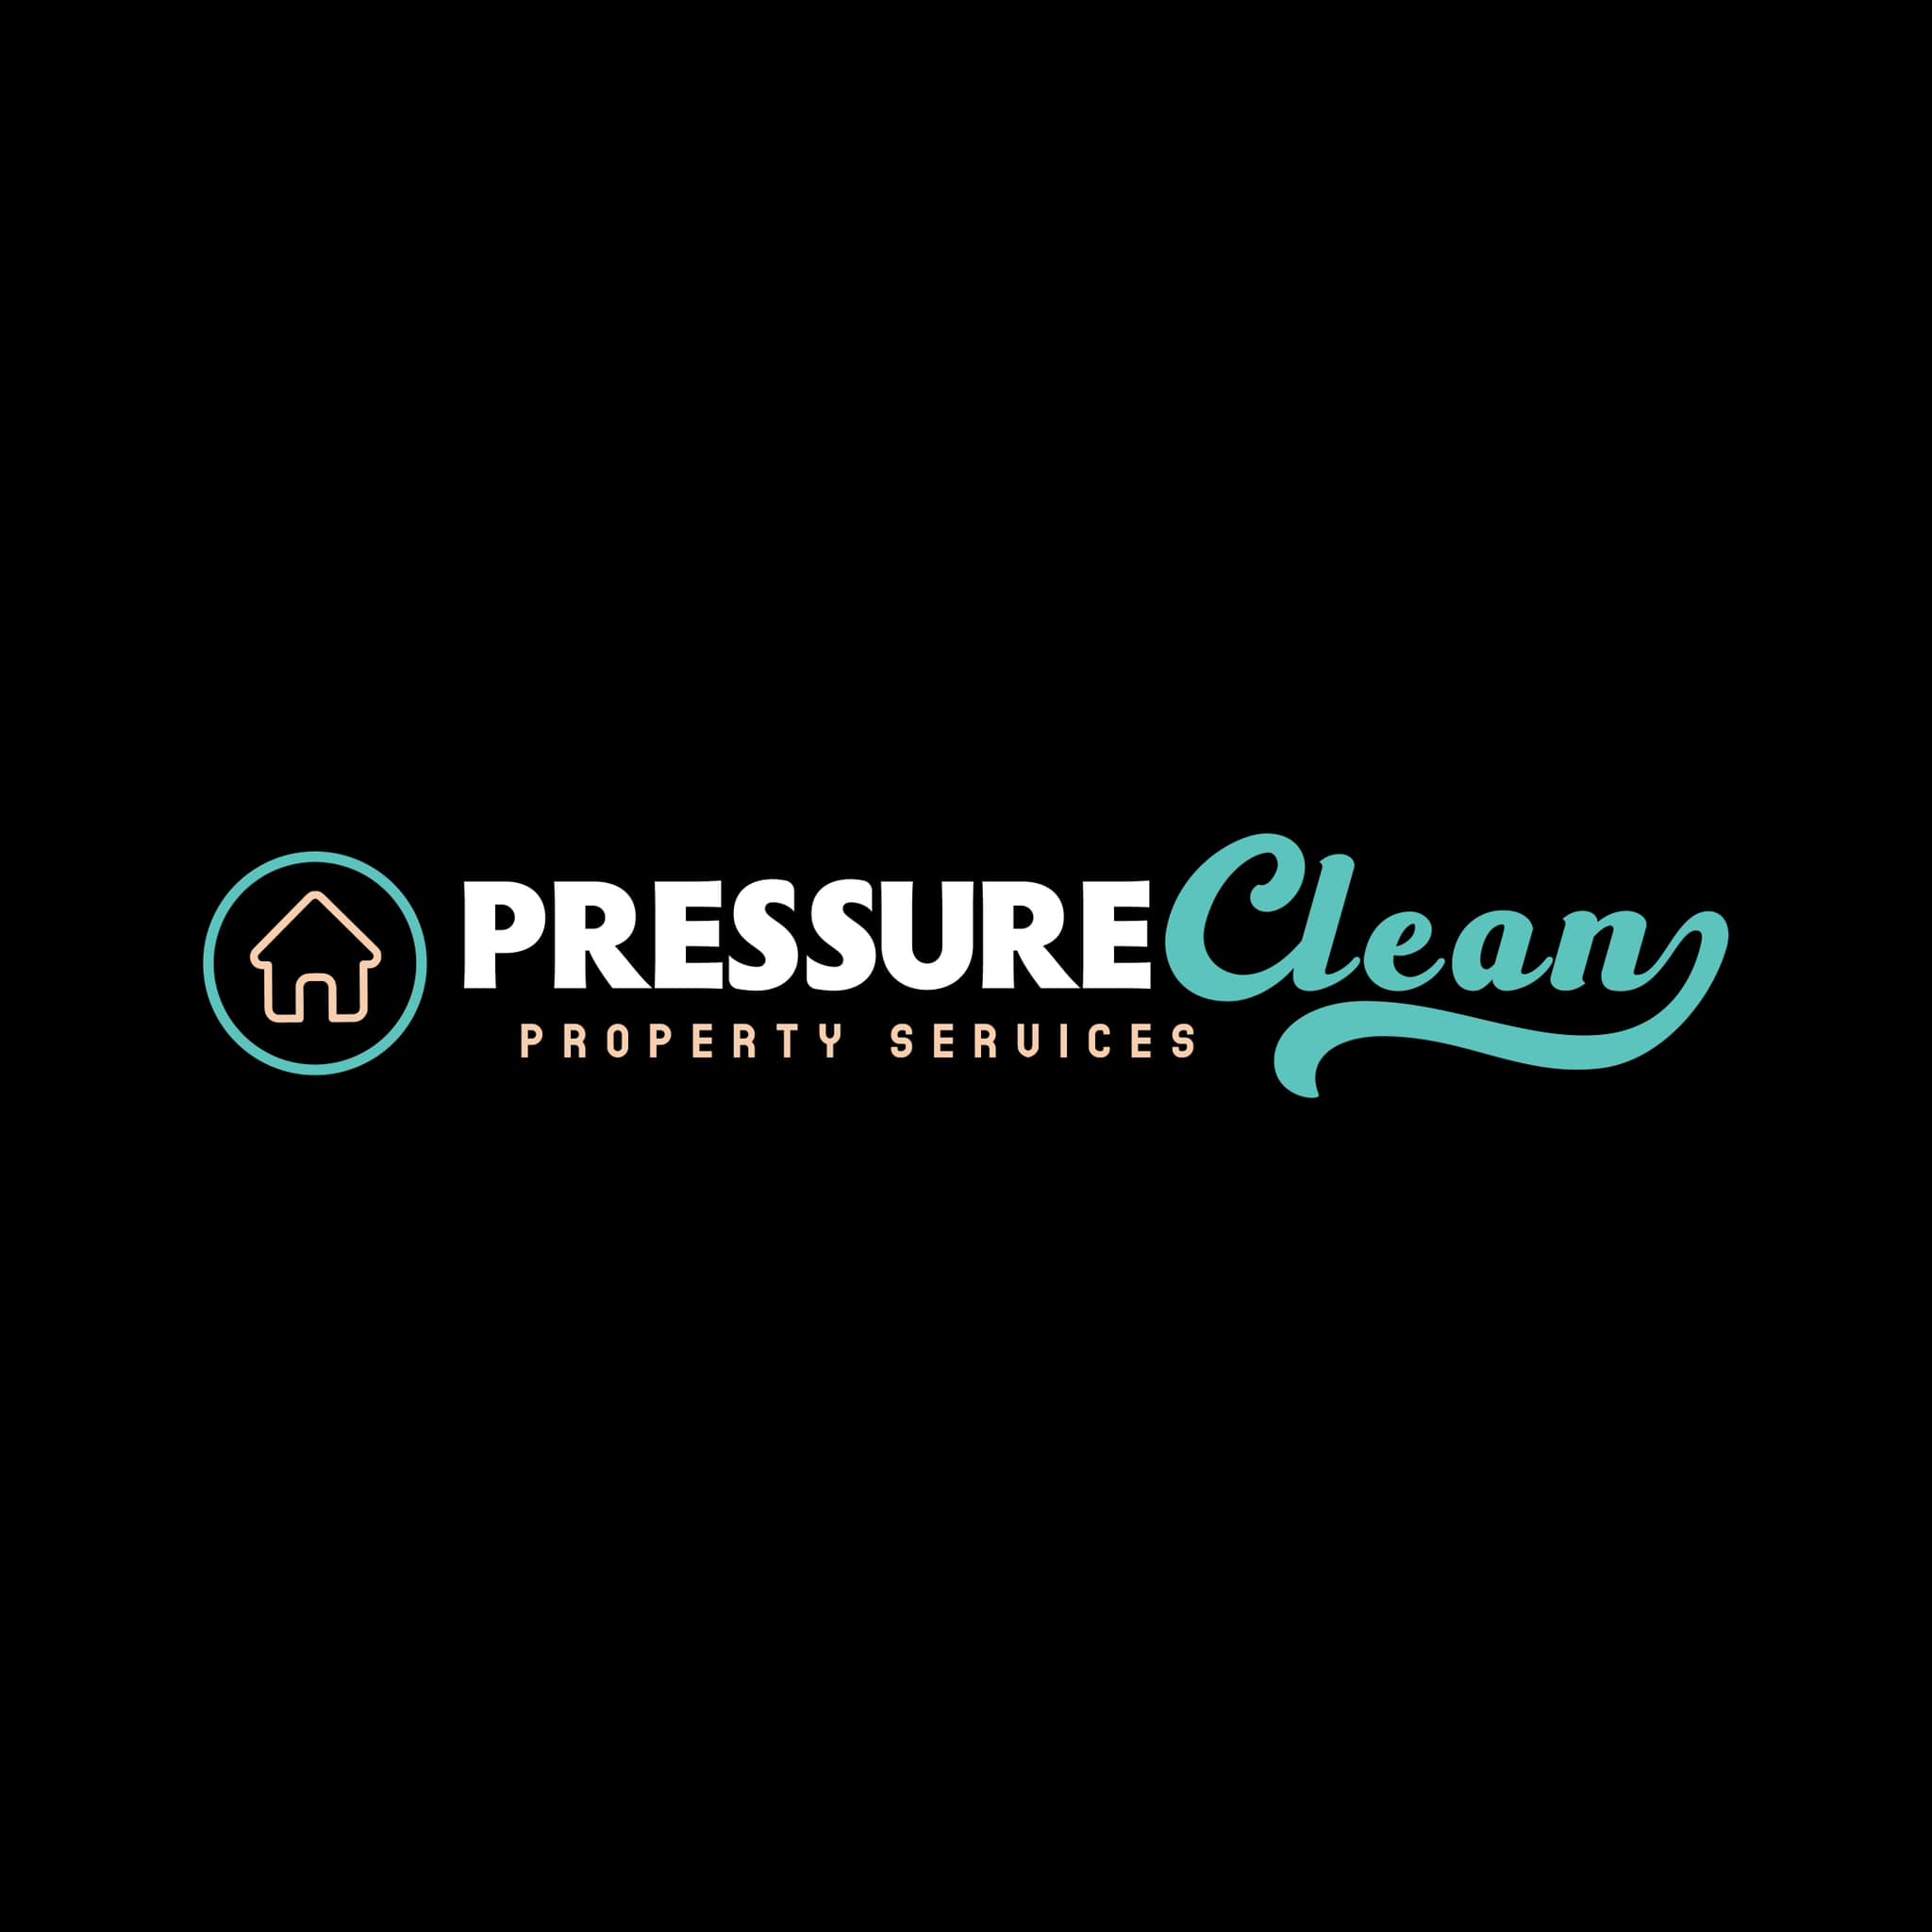 Pressure Clean's logo